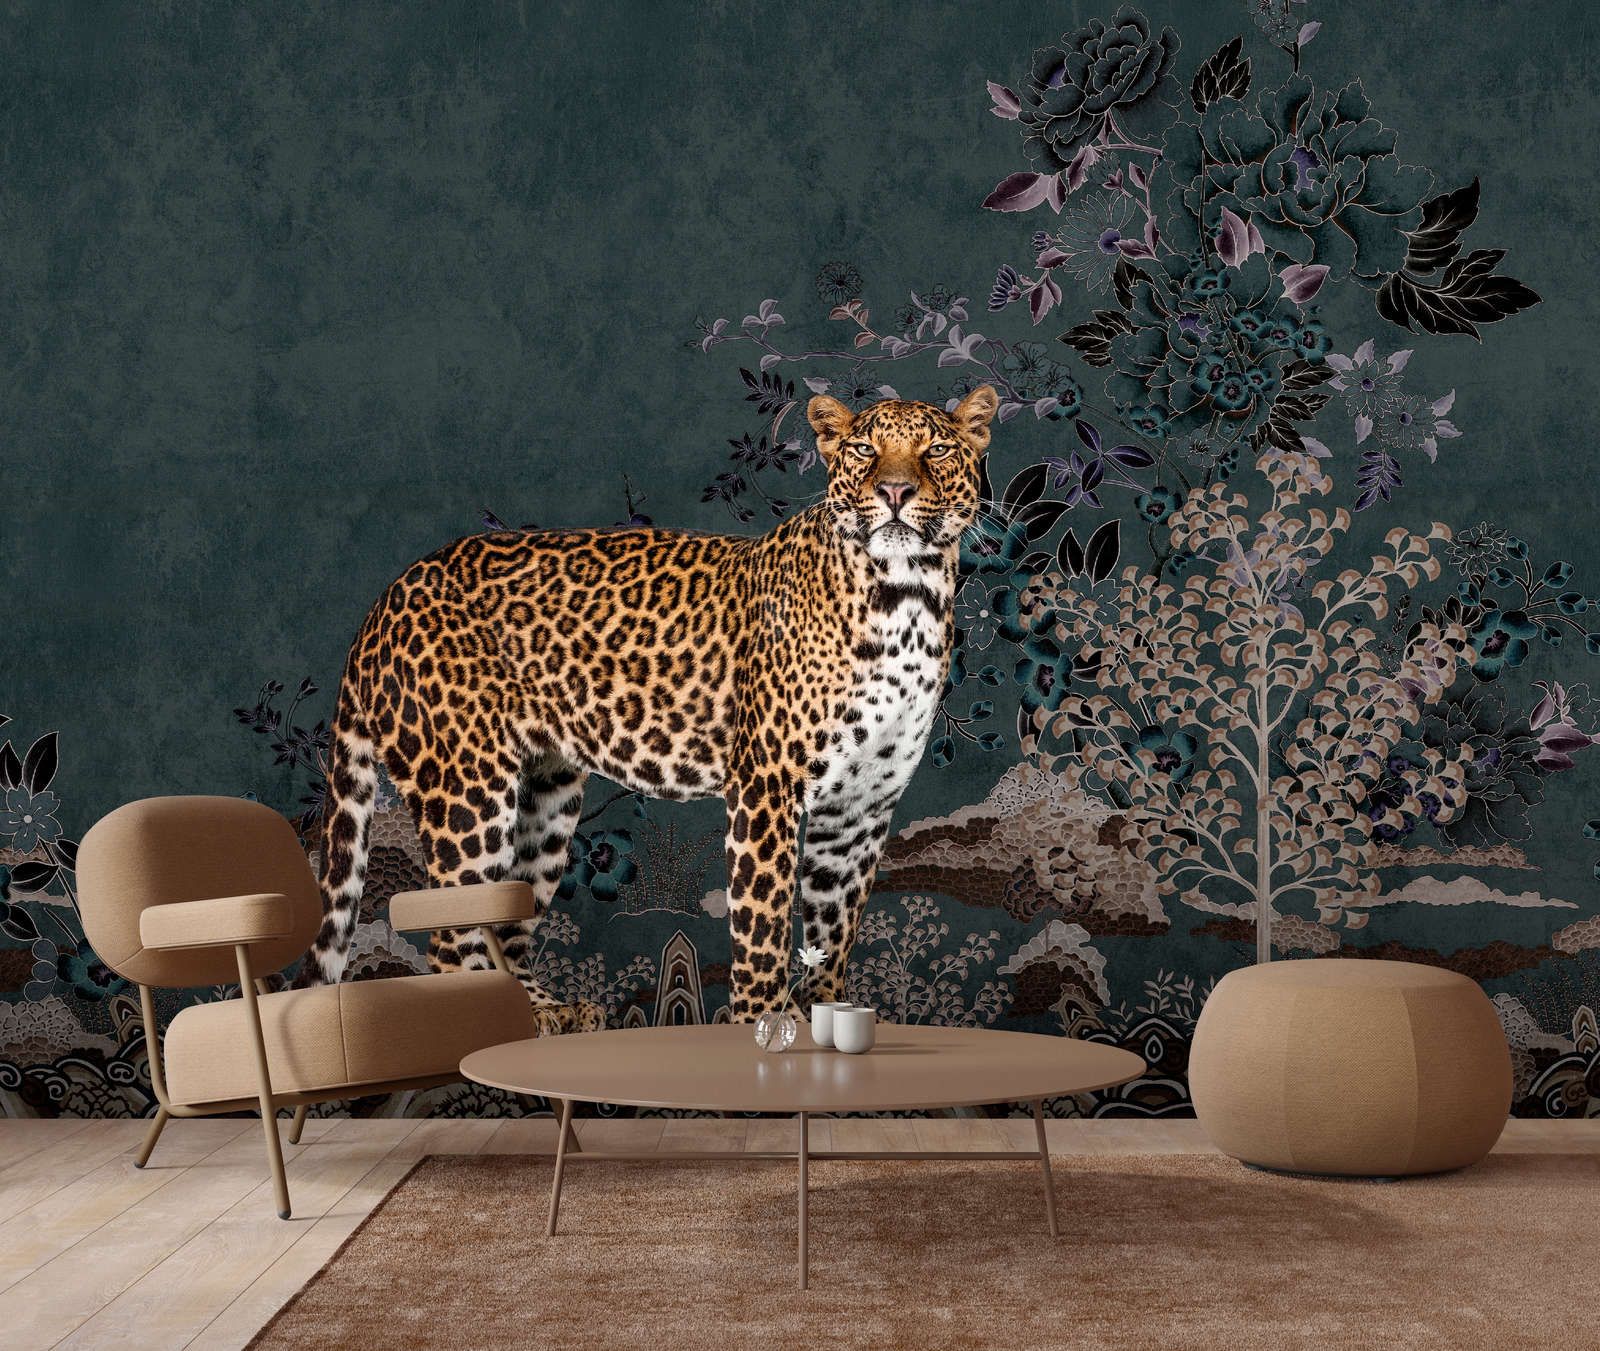             Photo wallpaper »rani« - Abstract jungle motif with leopard - Matt, smooth non-woven fabric
        